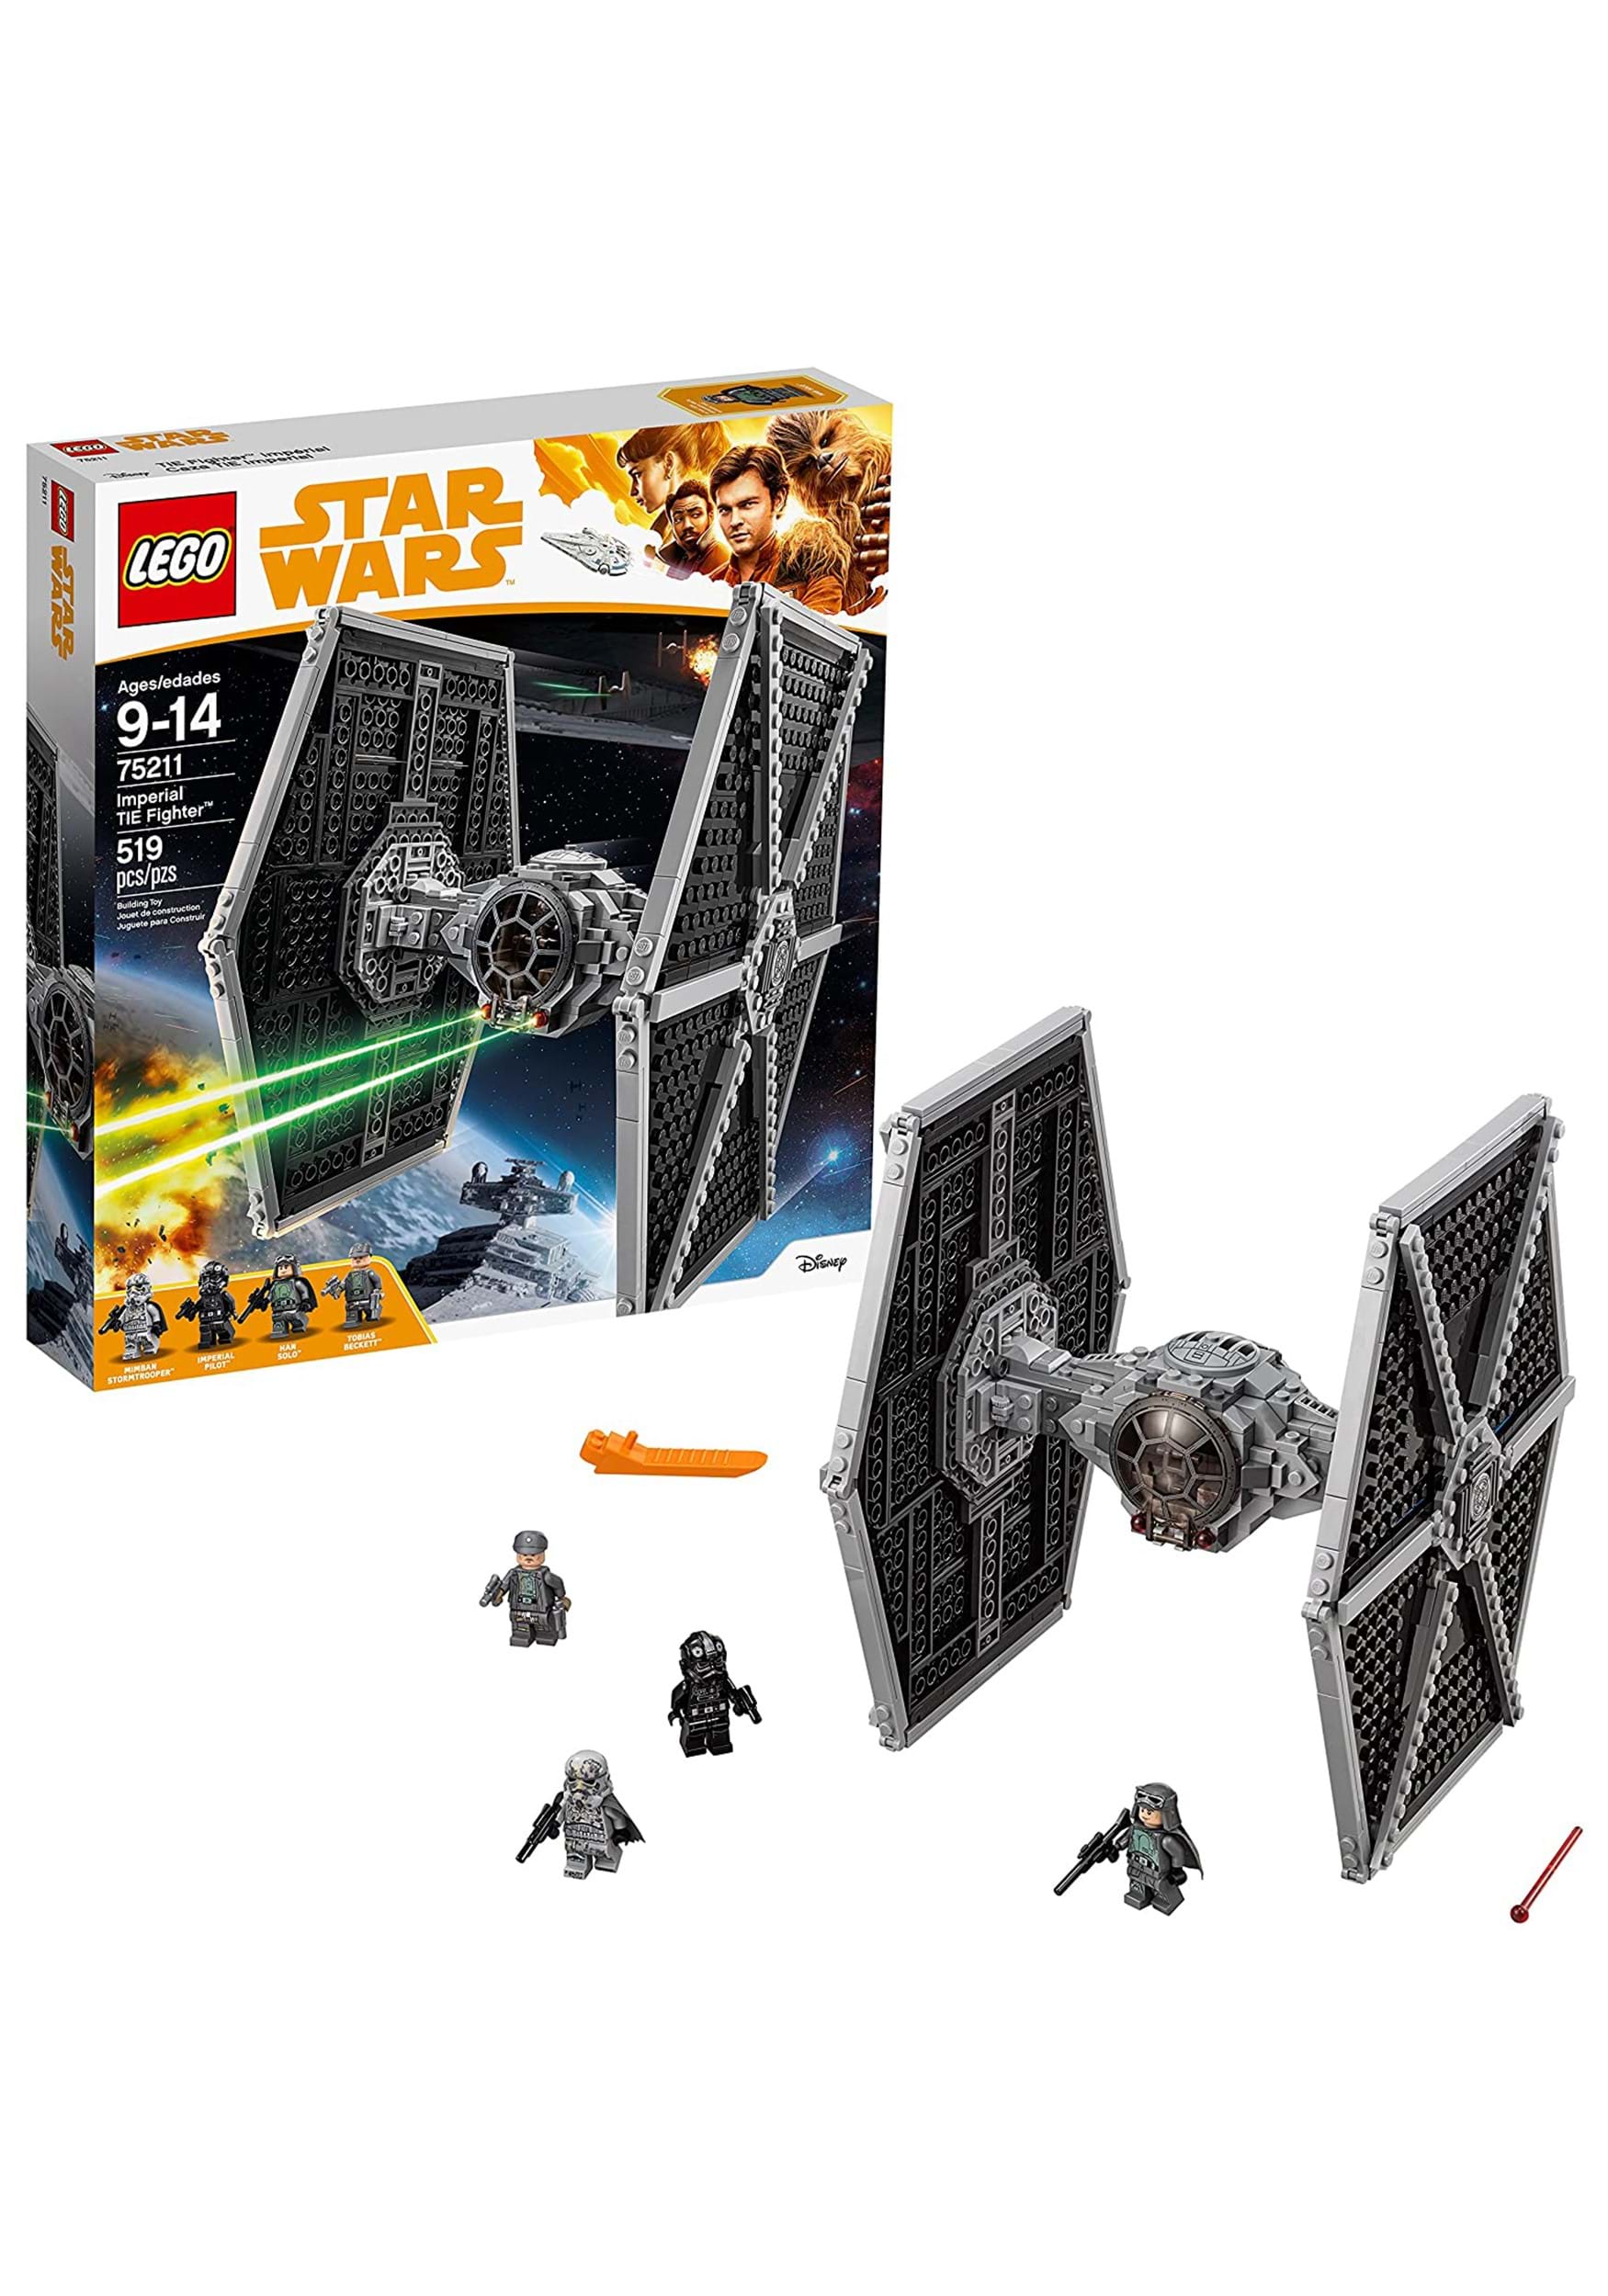 LEGO Star Wars Imperial TIE Fighter Toy Playset | LEGO Star Wars